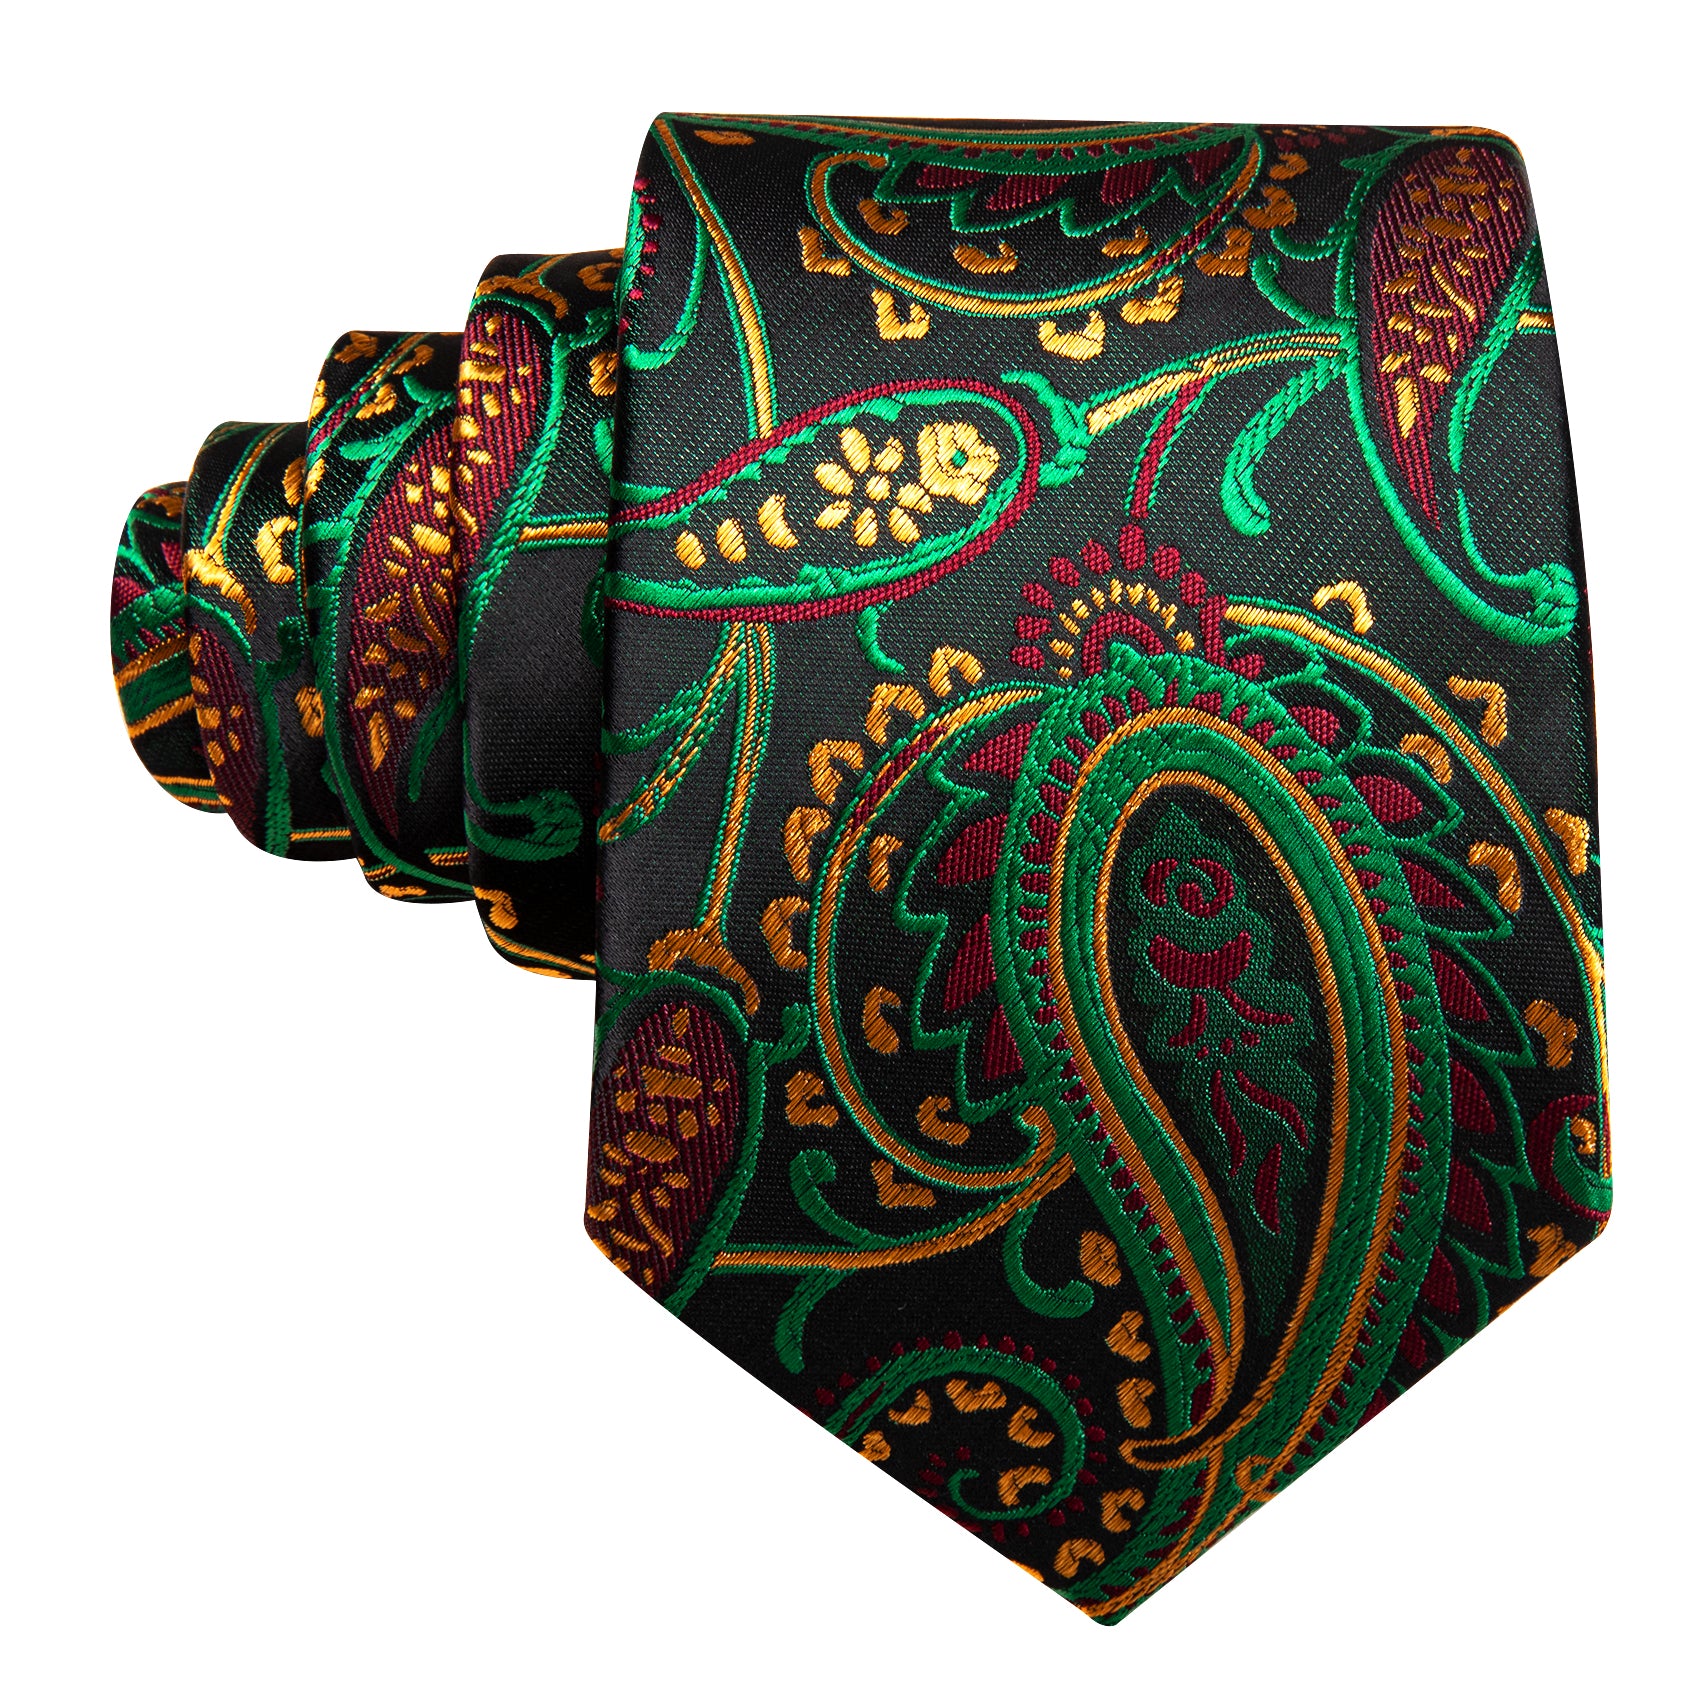  Black TIe Green Yellow Paisley Silk Tie Handkerchief Cufflinks Set